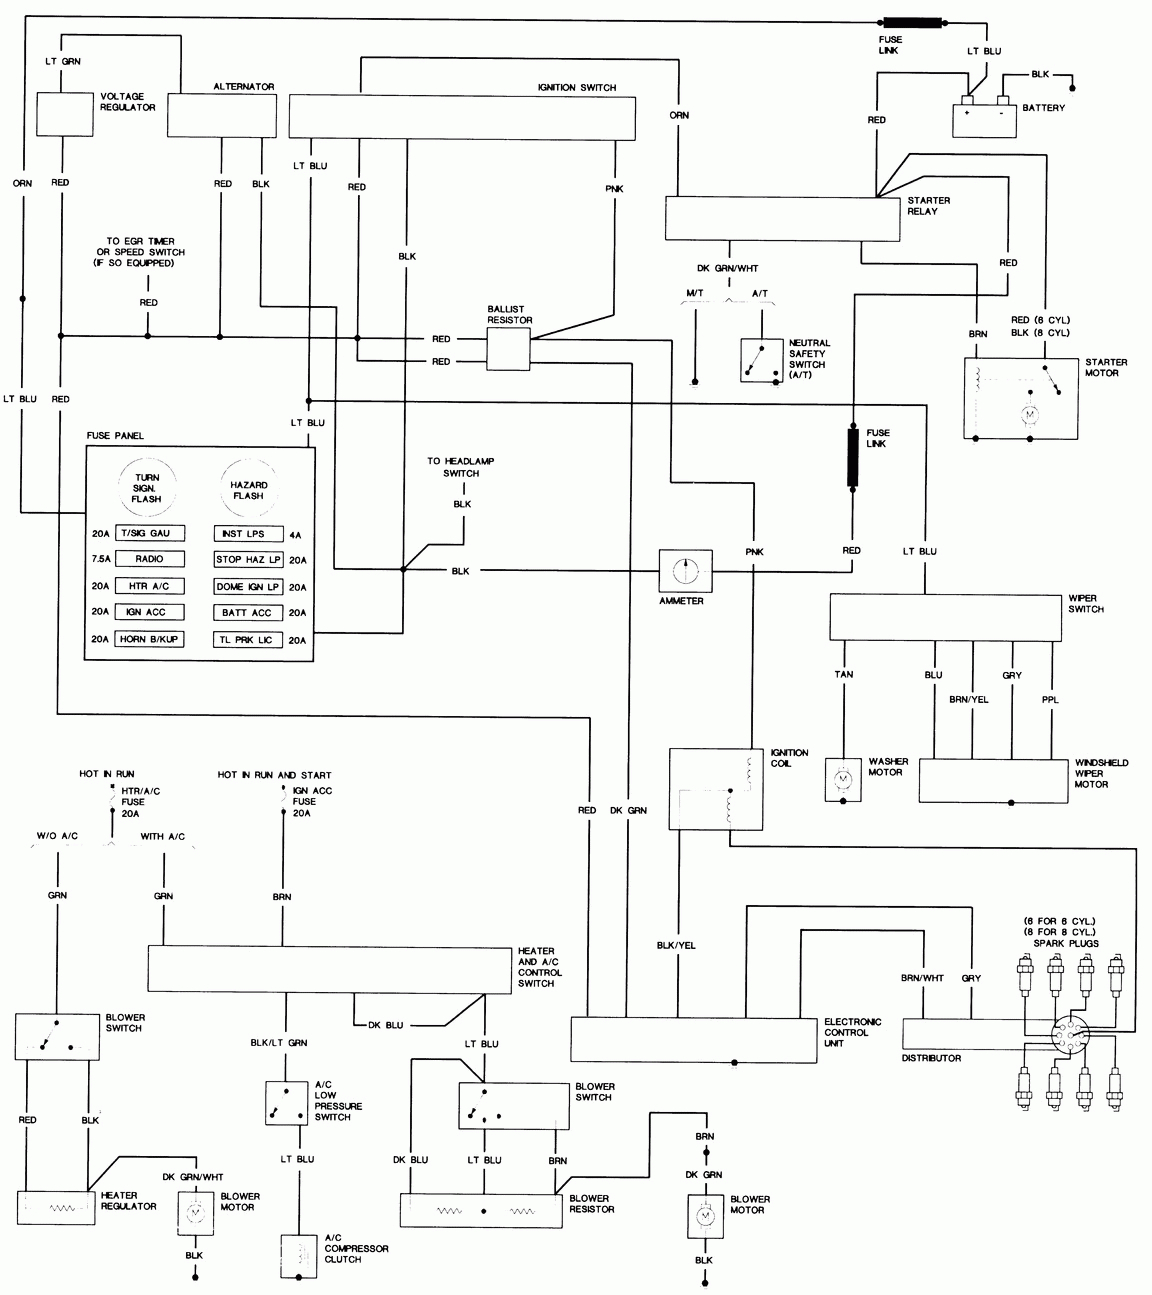 winnebago brave wiring diagram - Wiring Diagram